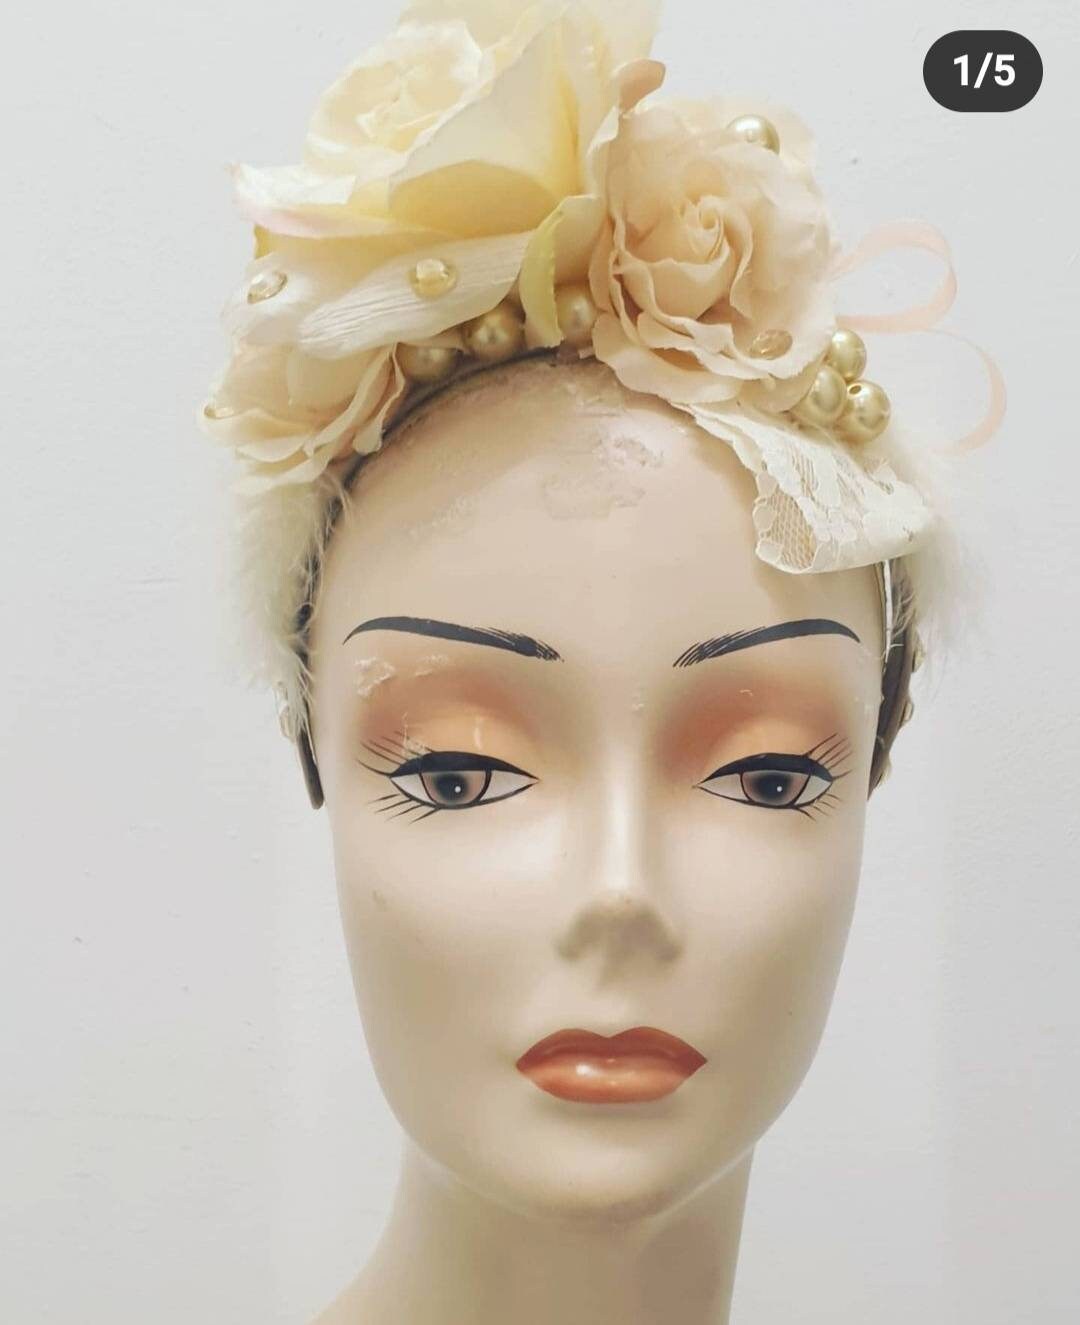 Ivory cream flower fascinator lace bohol headpiece headband flower crown wedding races bride womens